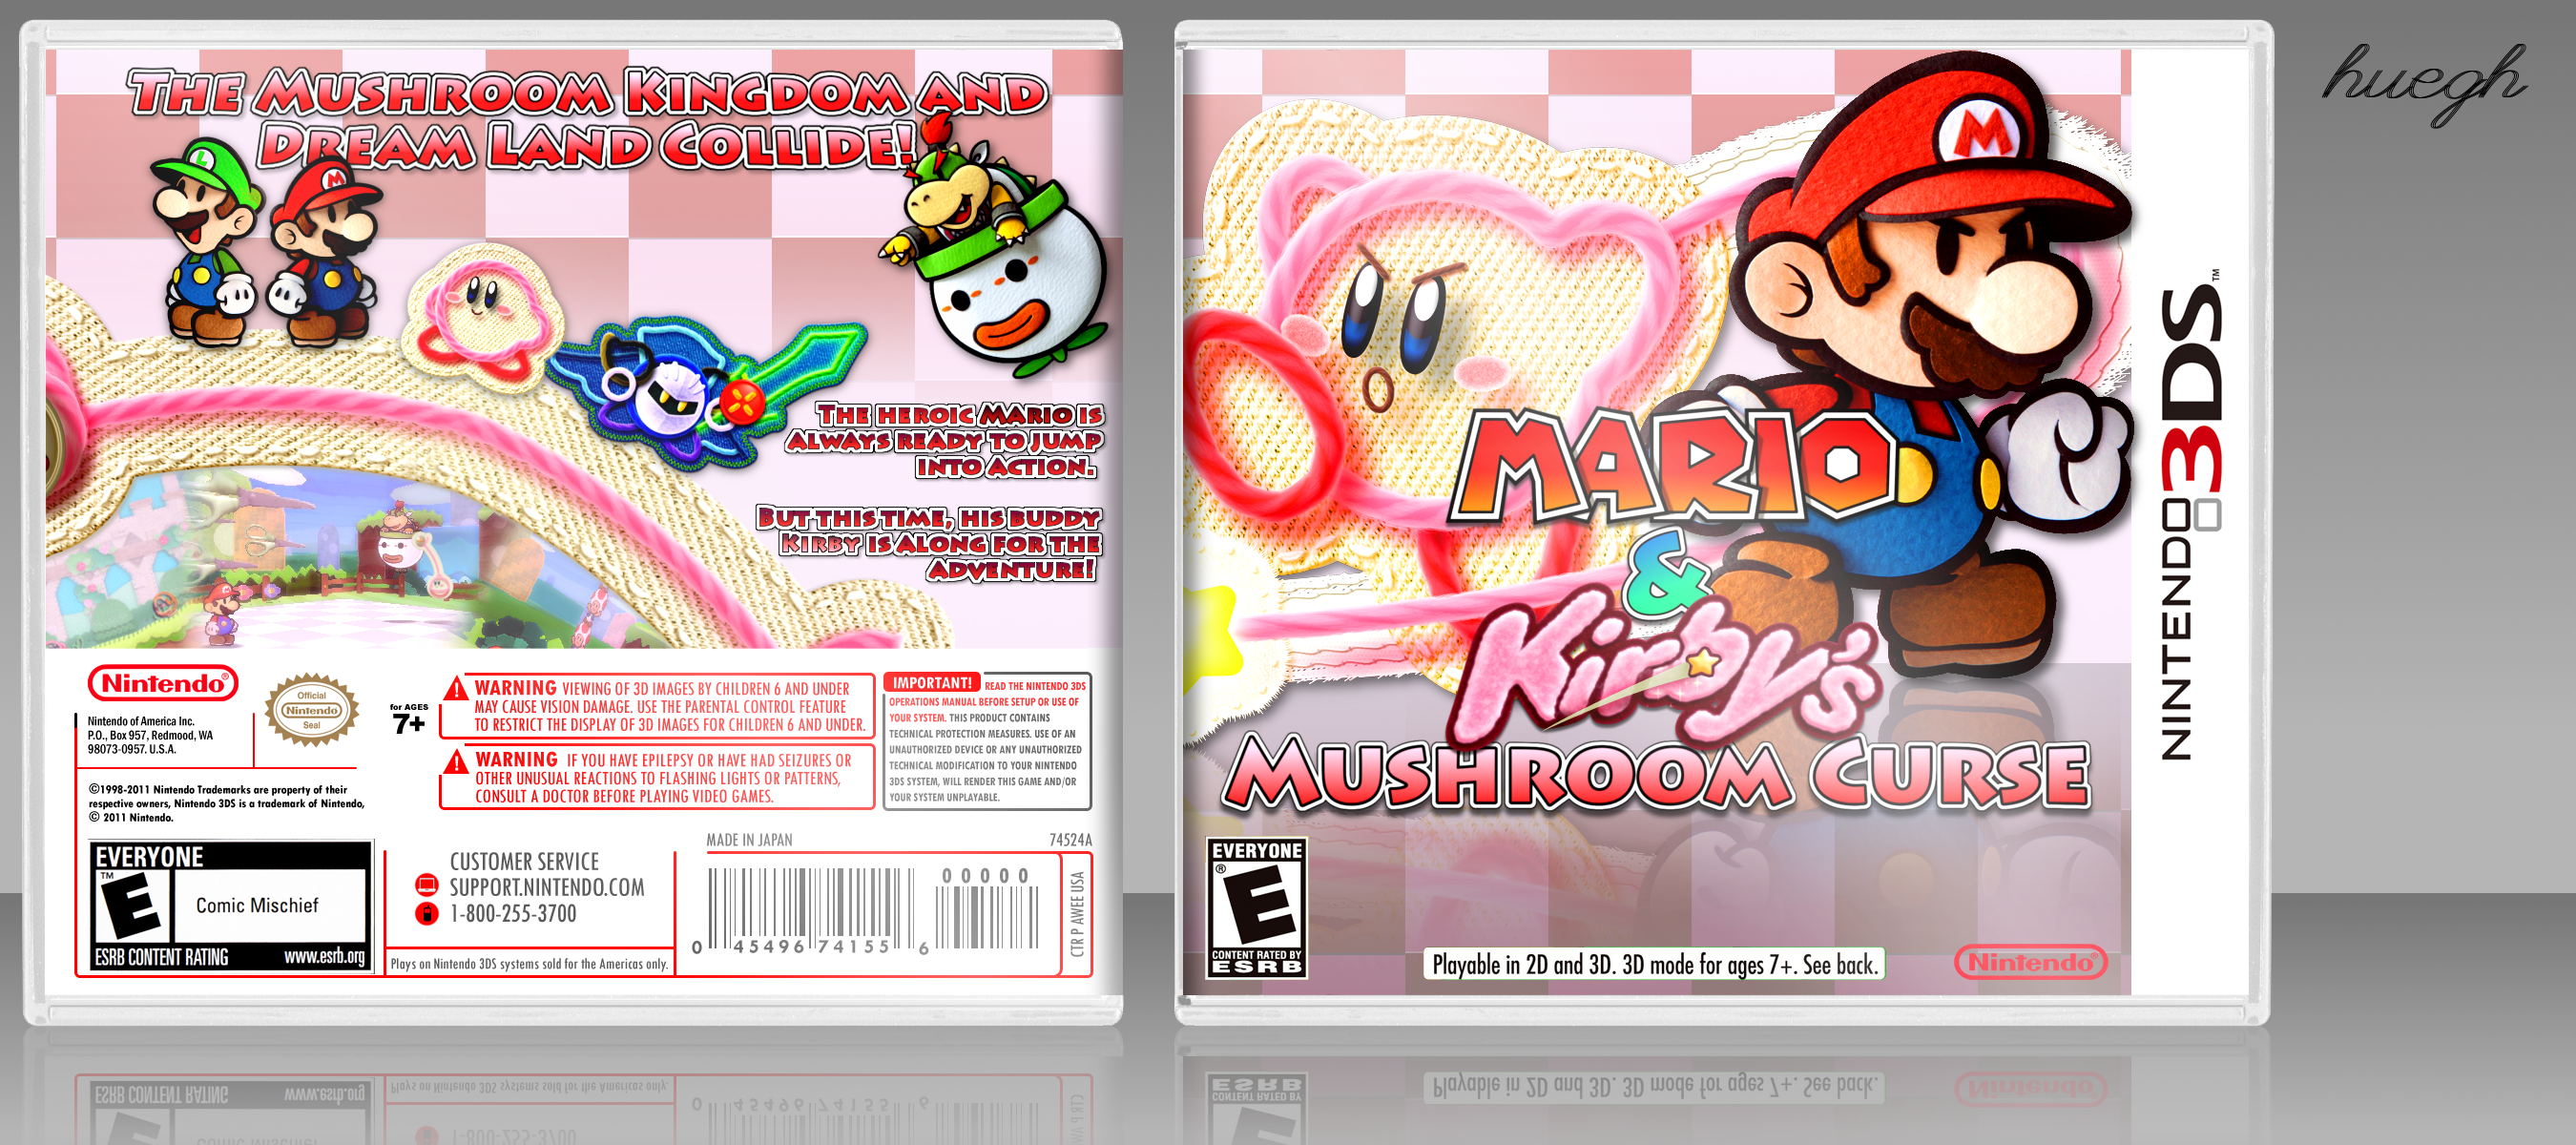 Mario and Kirby's Mushroom Curse box cover